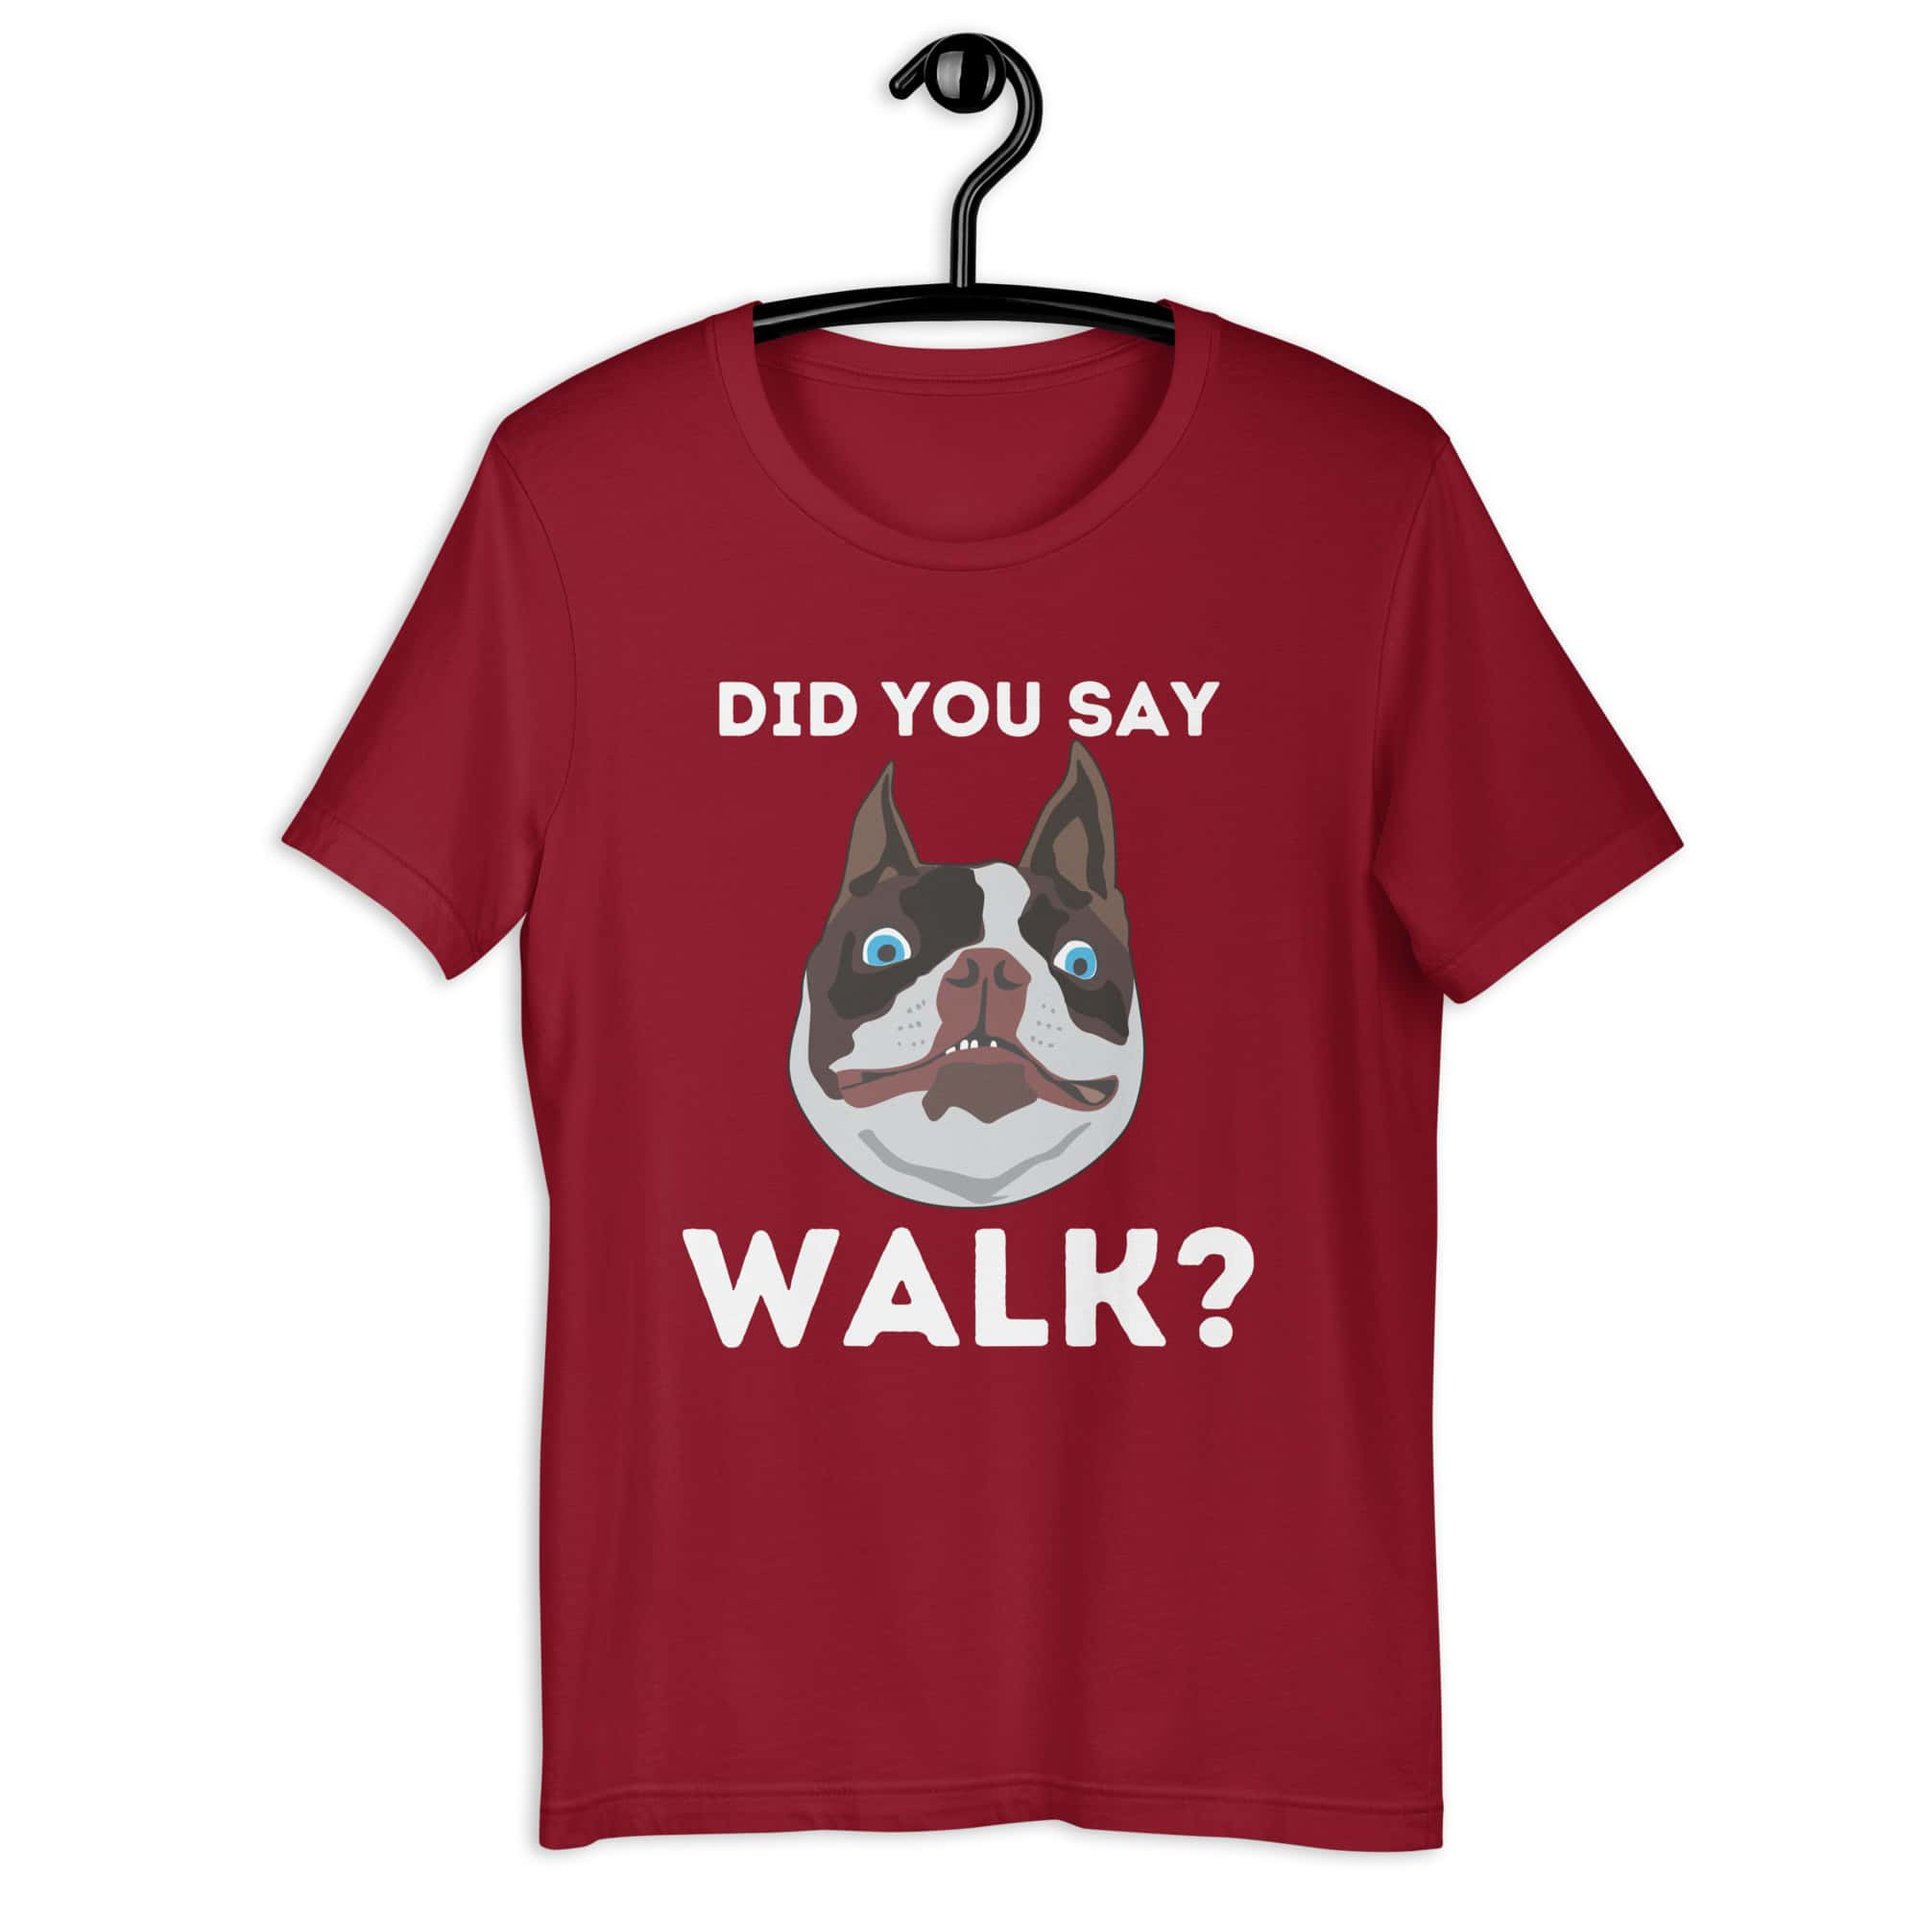 "Did You Say Walk?" Funny Dog Unisex T-Shirt. Cardinal